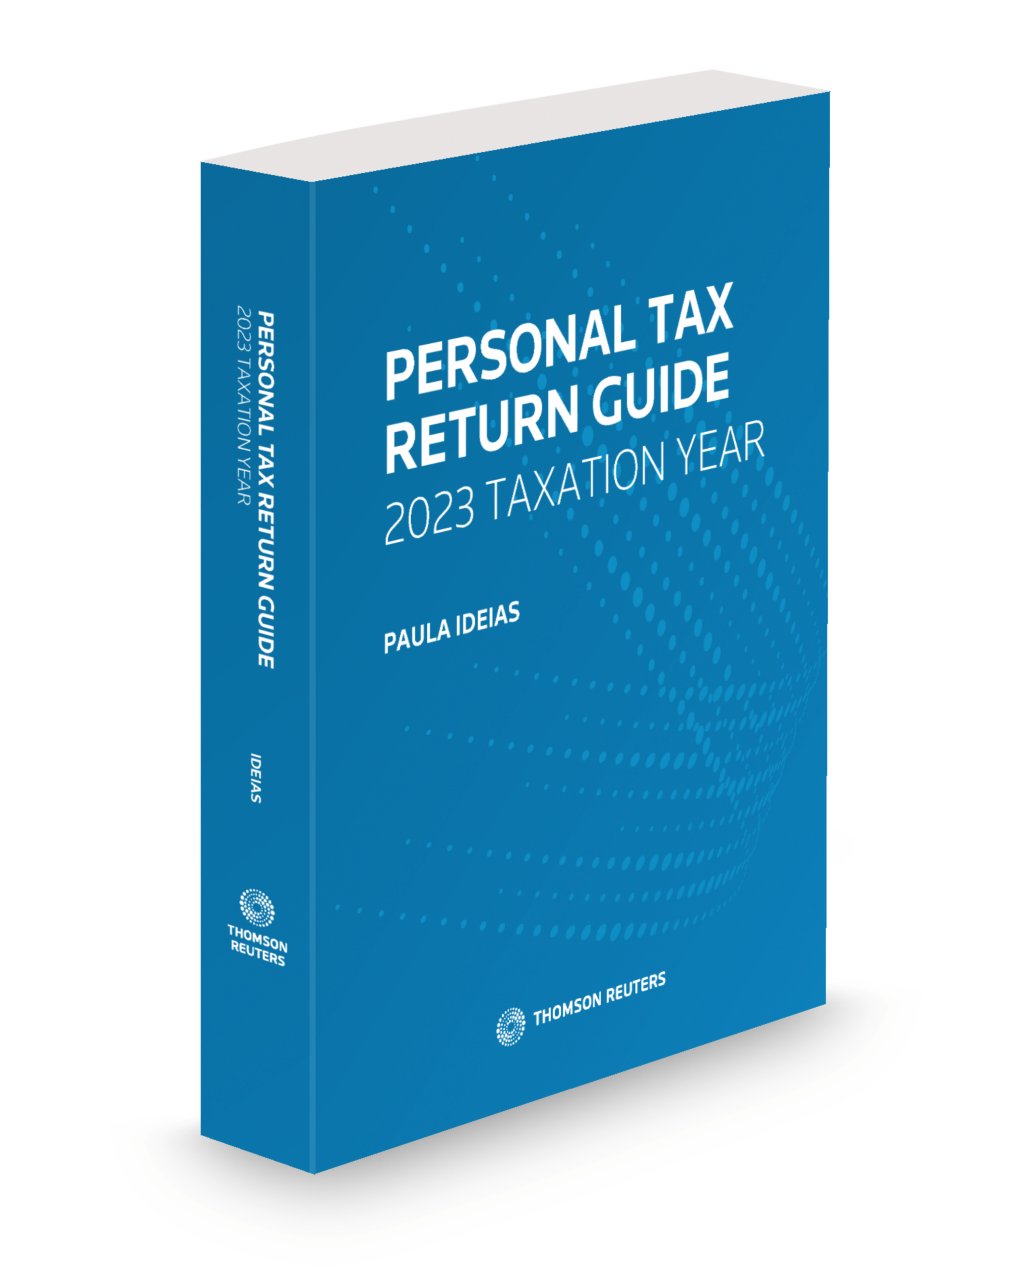 Personal Tax Return Guide, 2023 Taxation Year